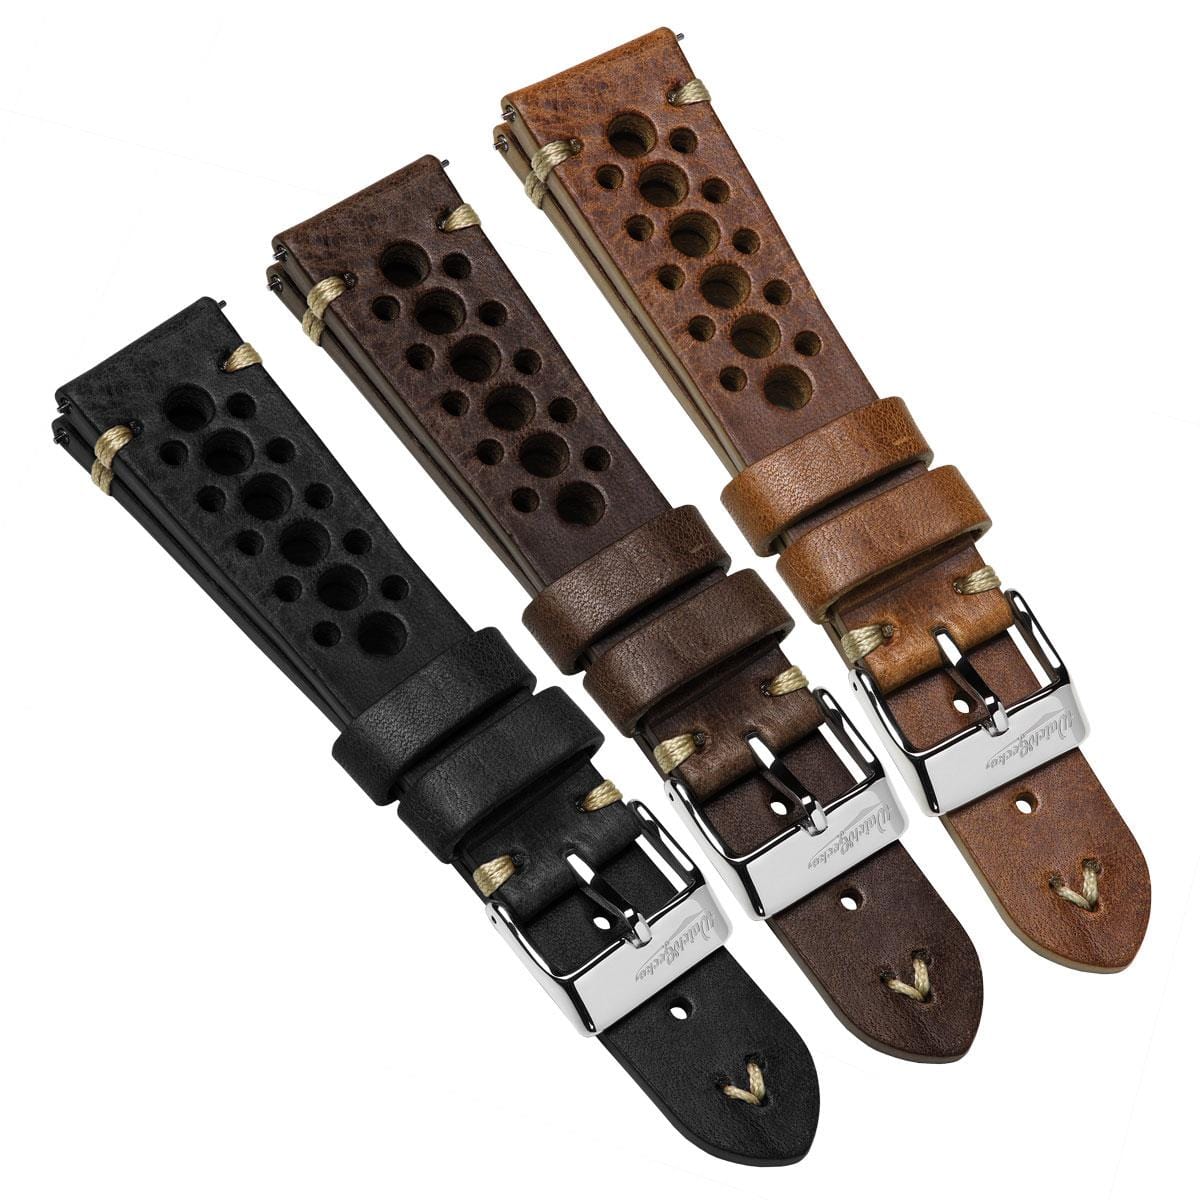 WatchGecko V-Stitch Italian Leather Perforated Watch Strap - Chocolate Brown